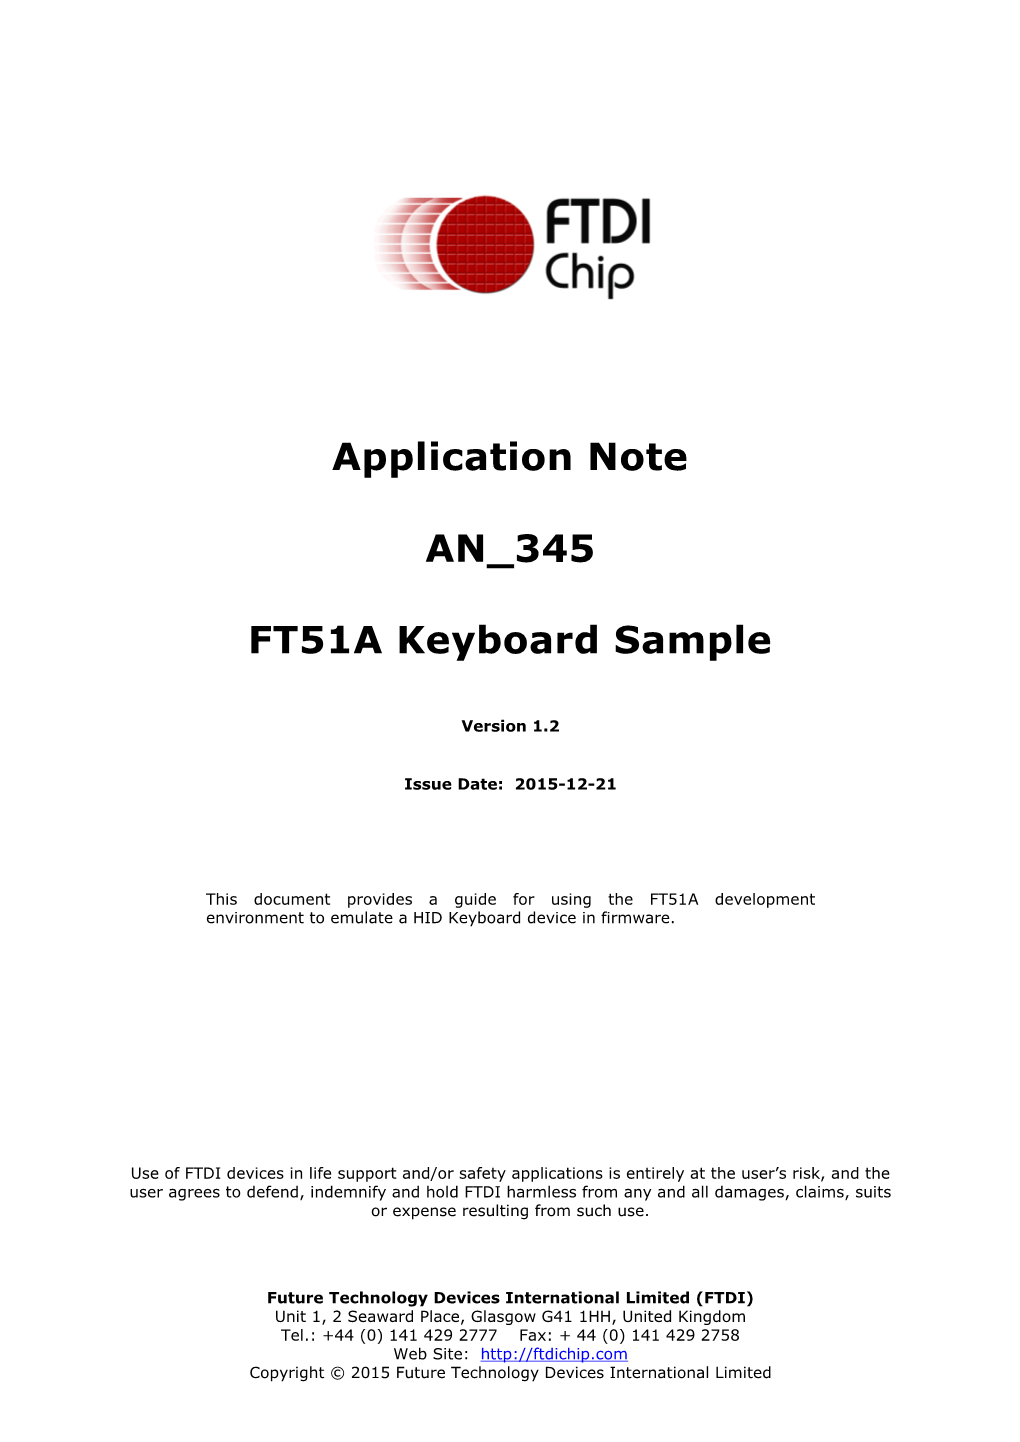 FT51A Keyboard Sample